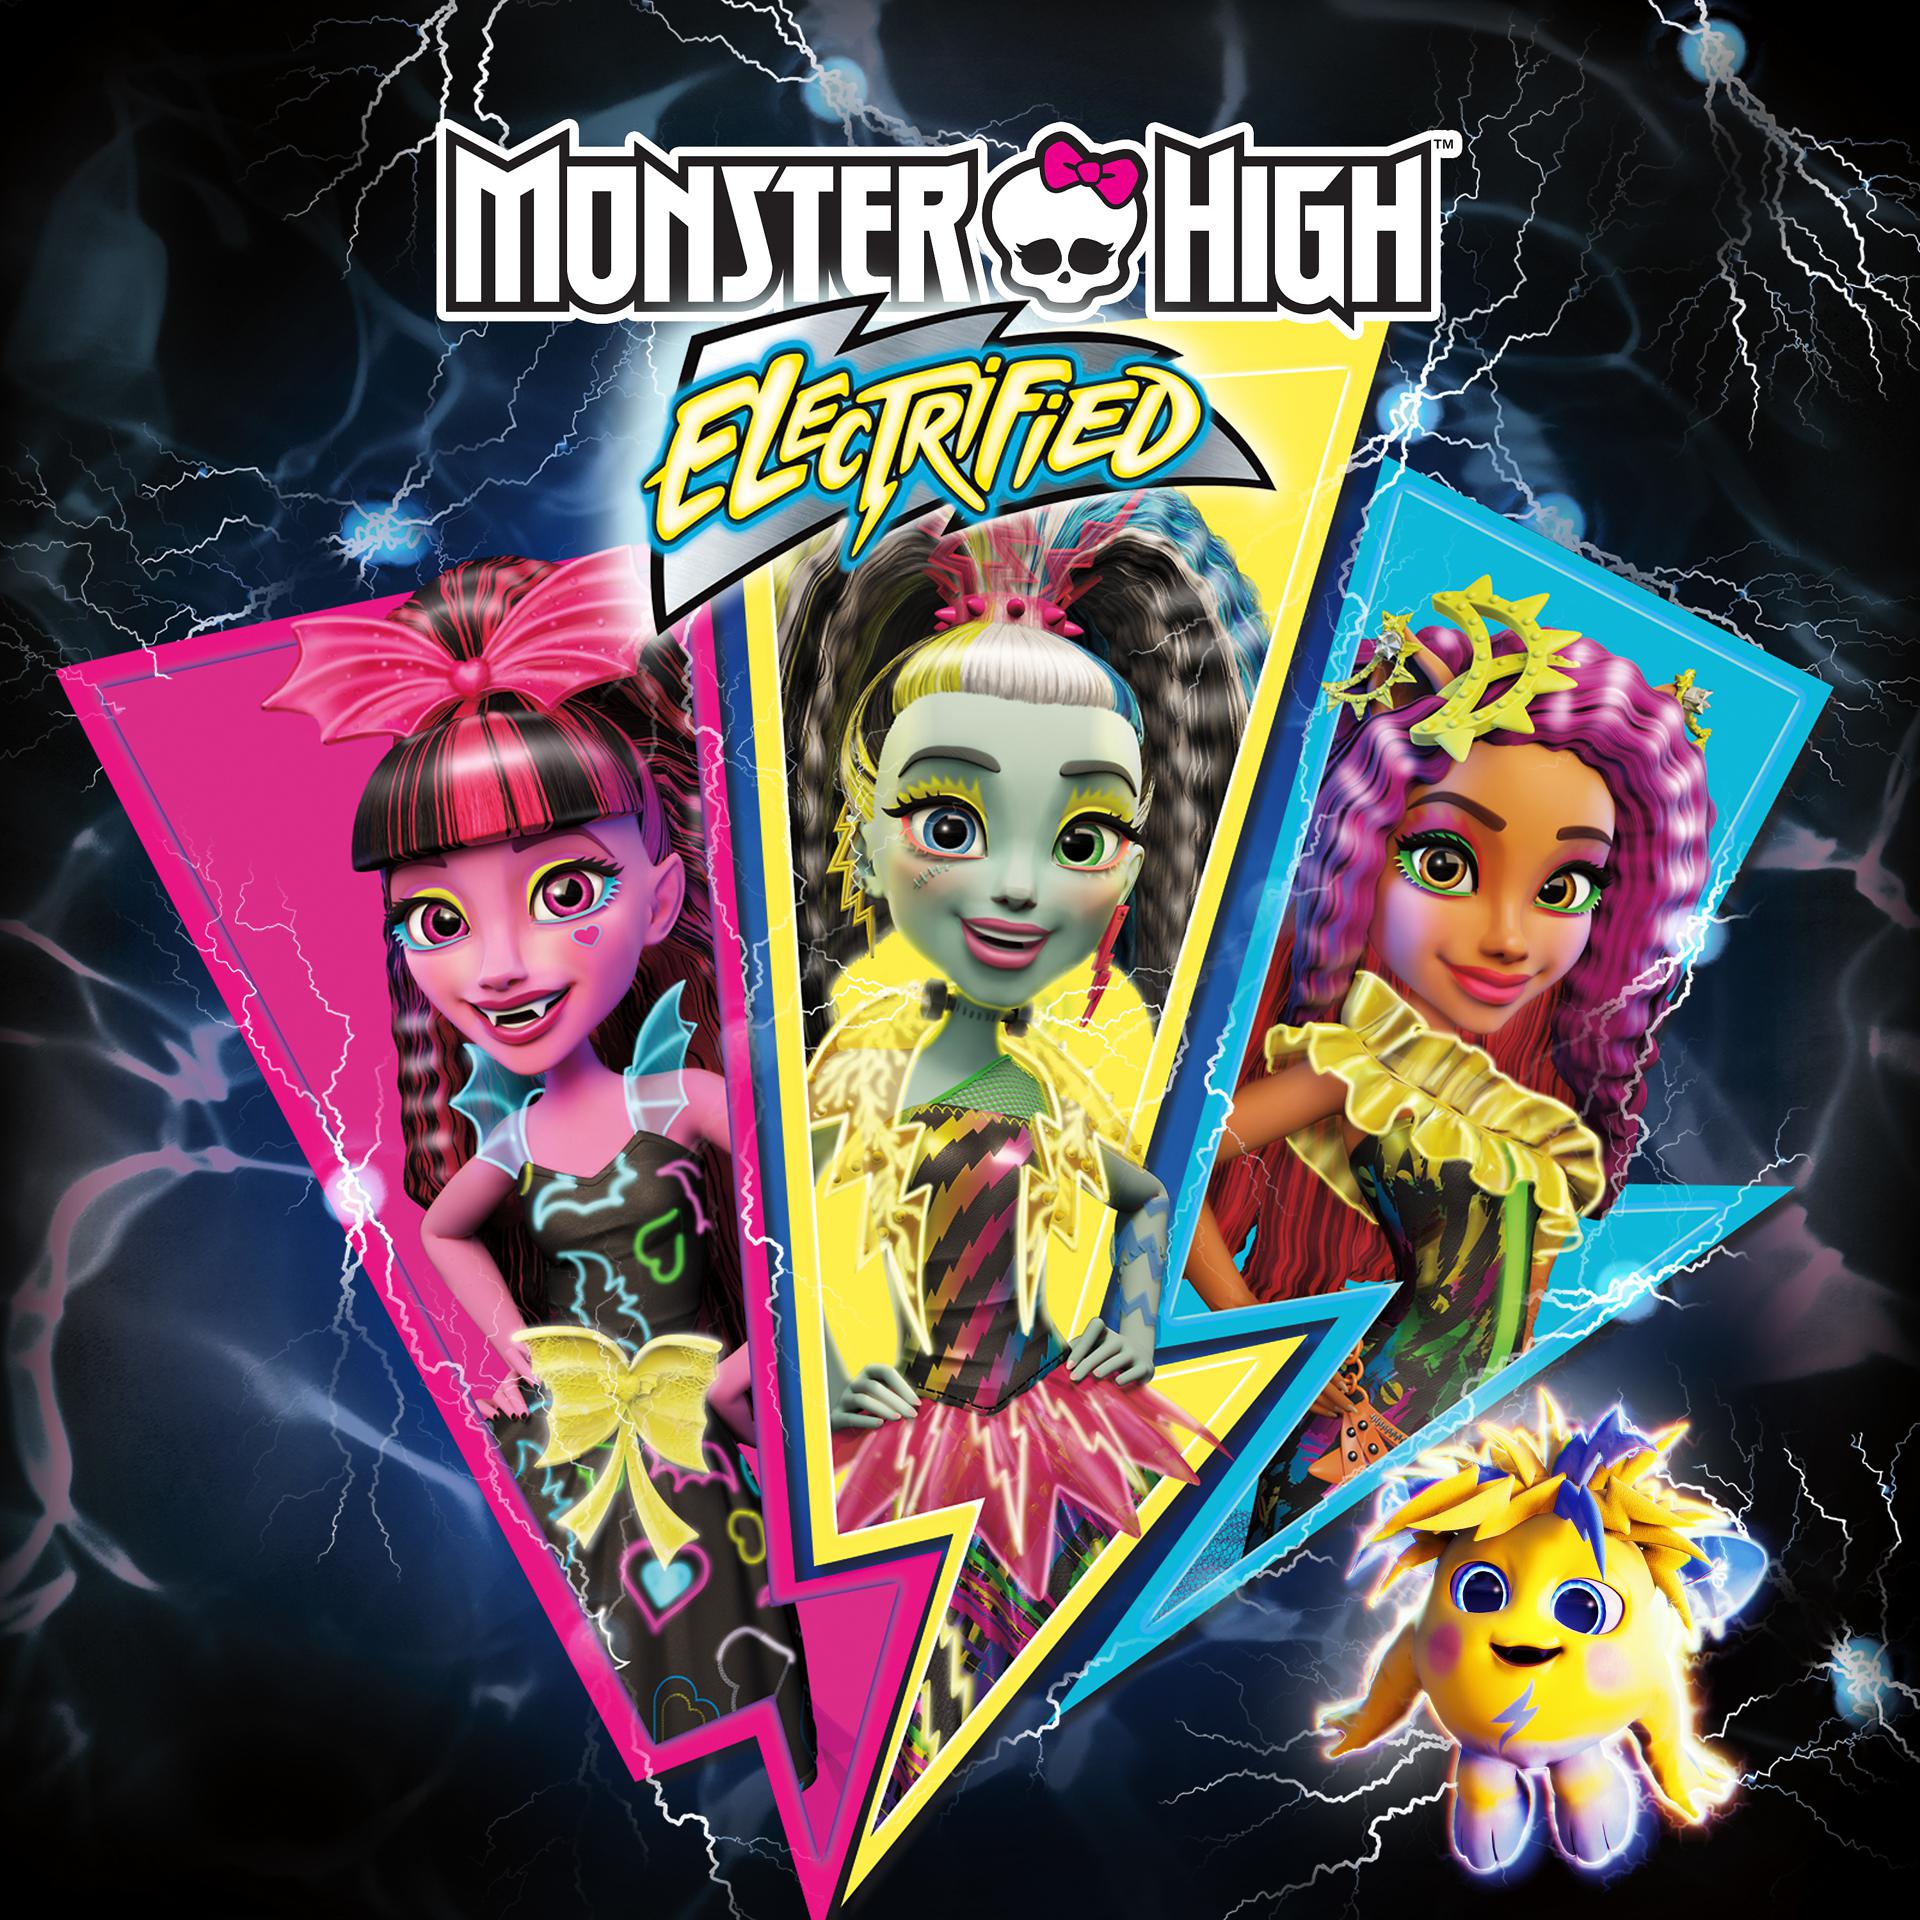 Монстер Хай Electrified. Monster High Electrified. Monster High - Электризованные / Electrified. Monster High Electric Fashion. Школа монстров песни